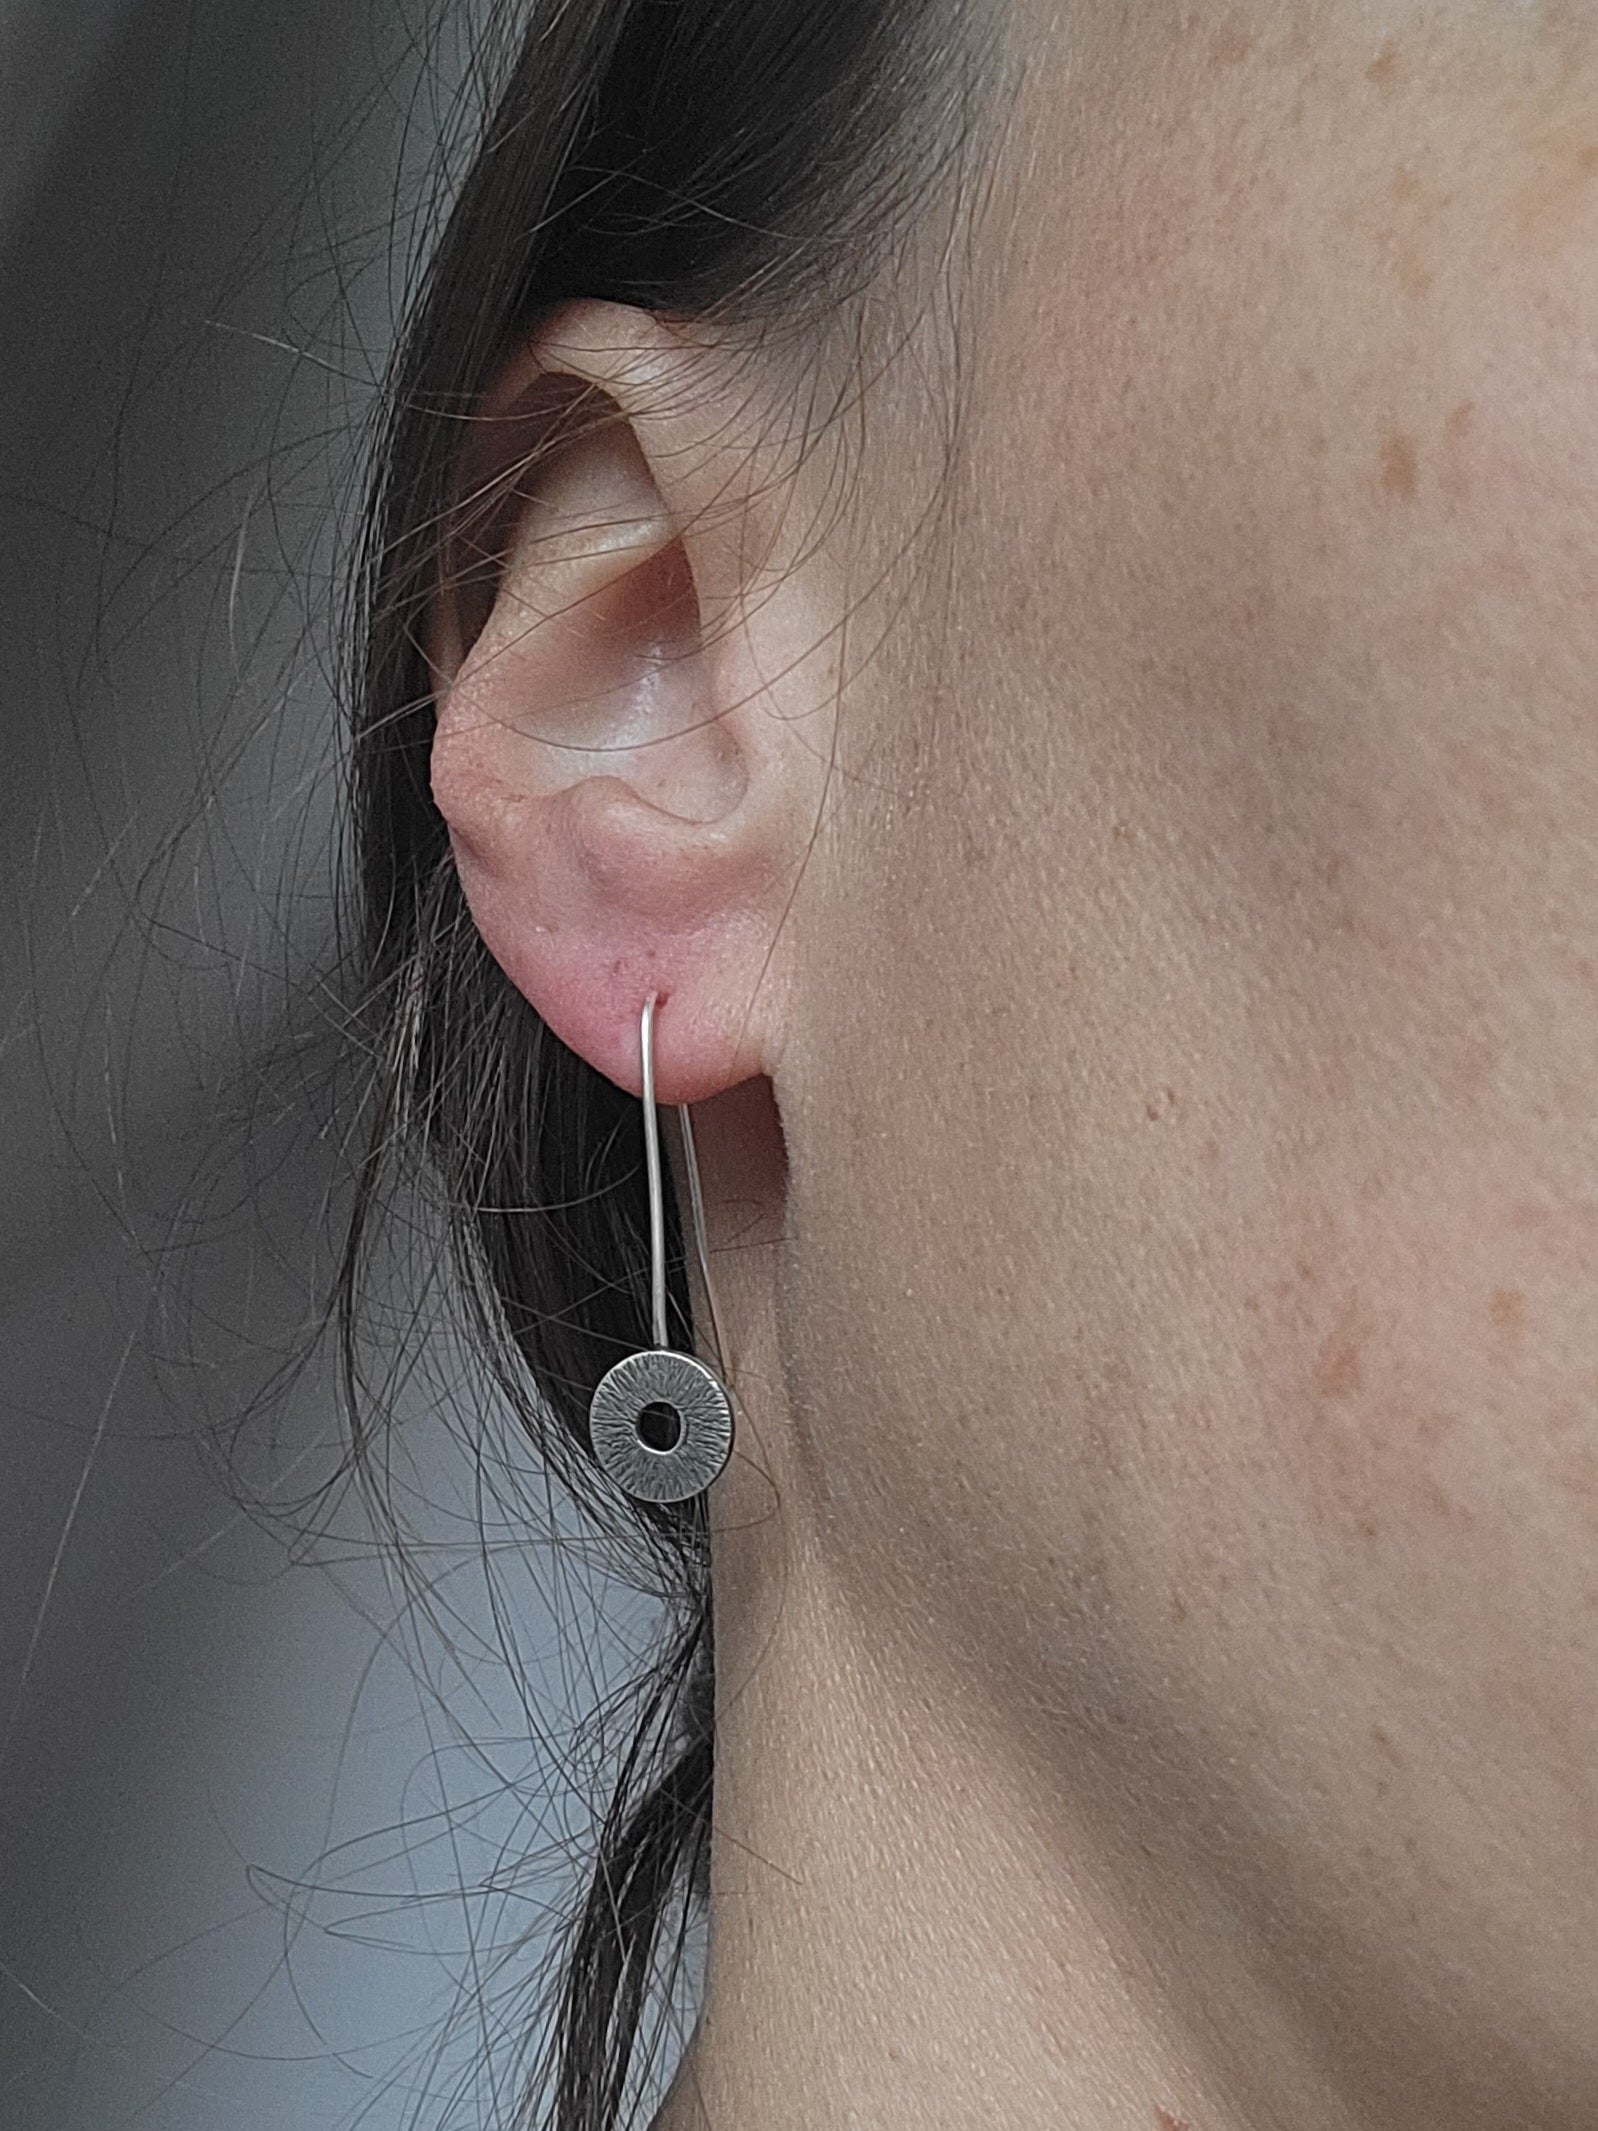 Dainty Silver earrings for Manifestation by inspirational jewelry artist Jaclyn Nicole